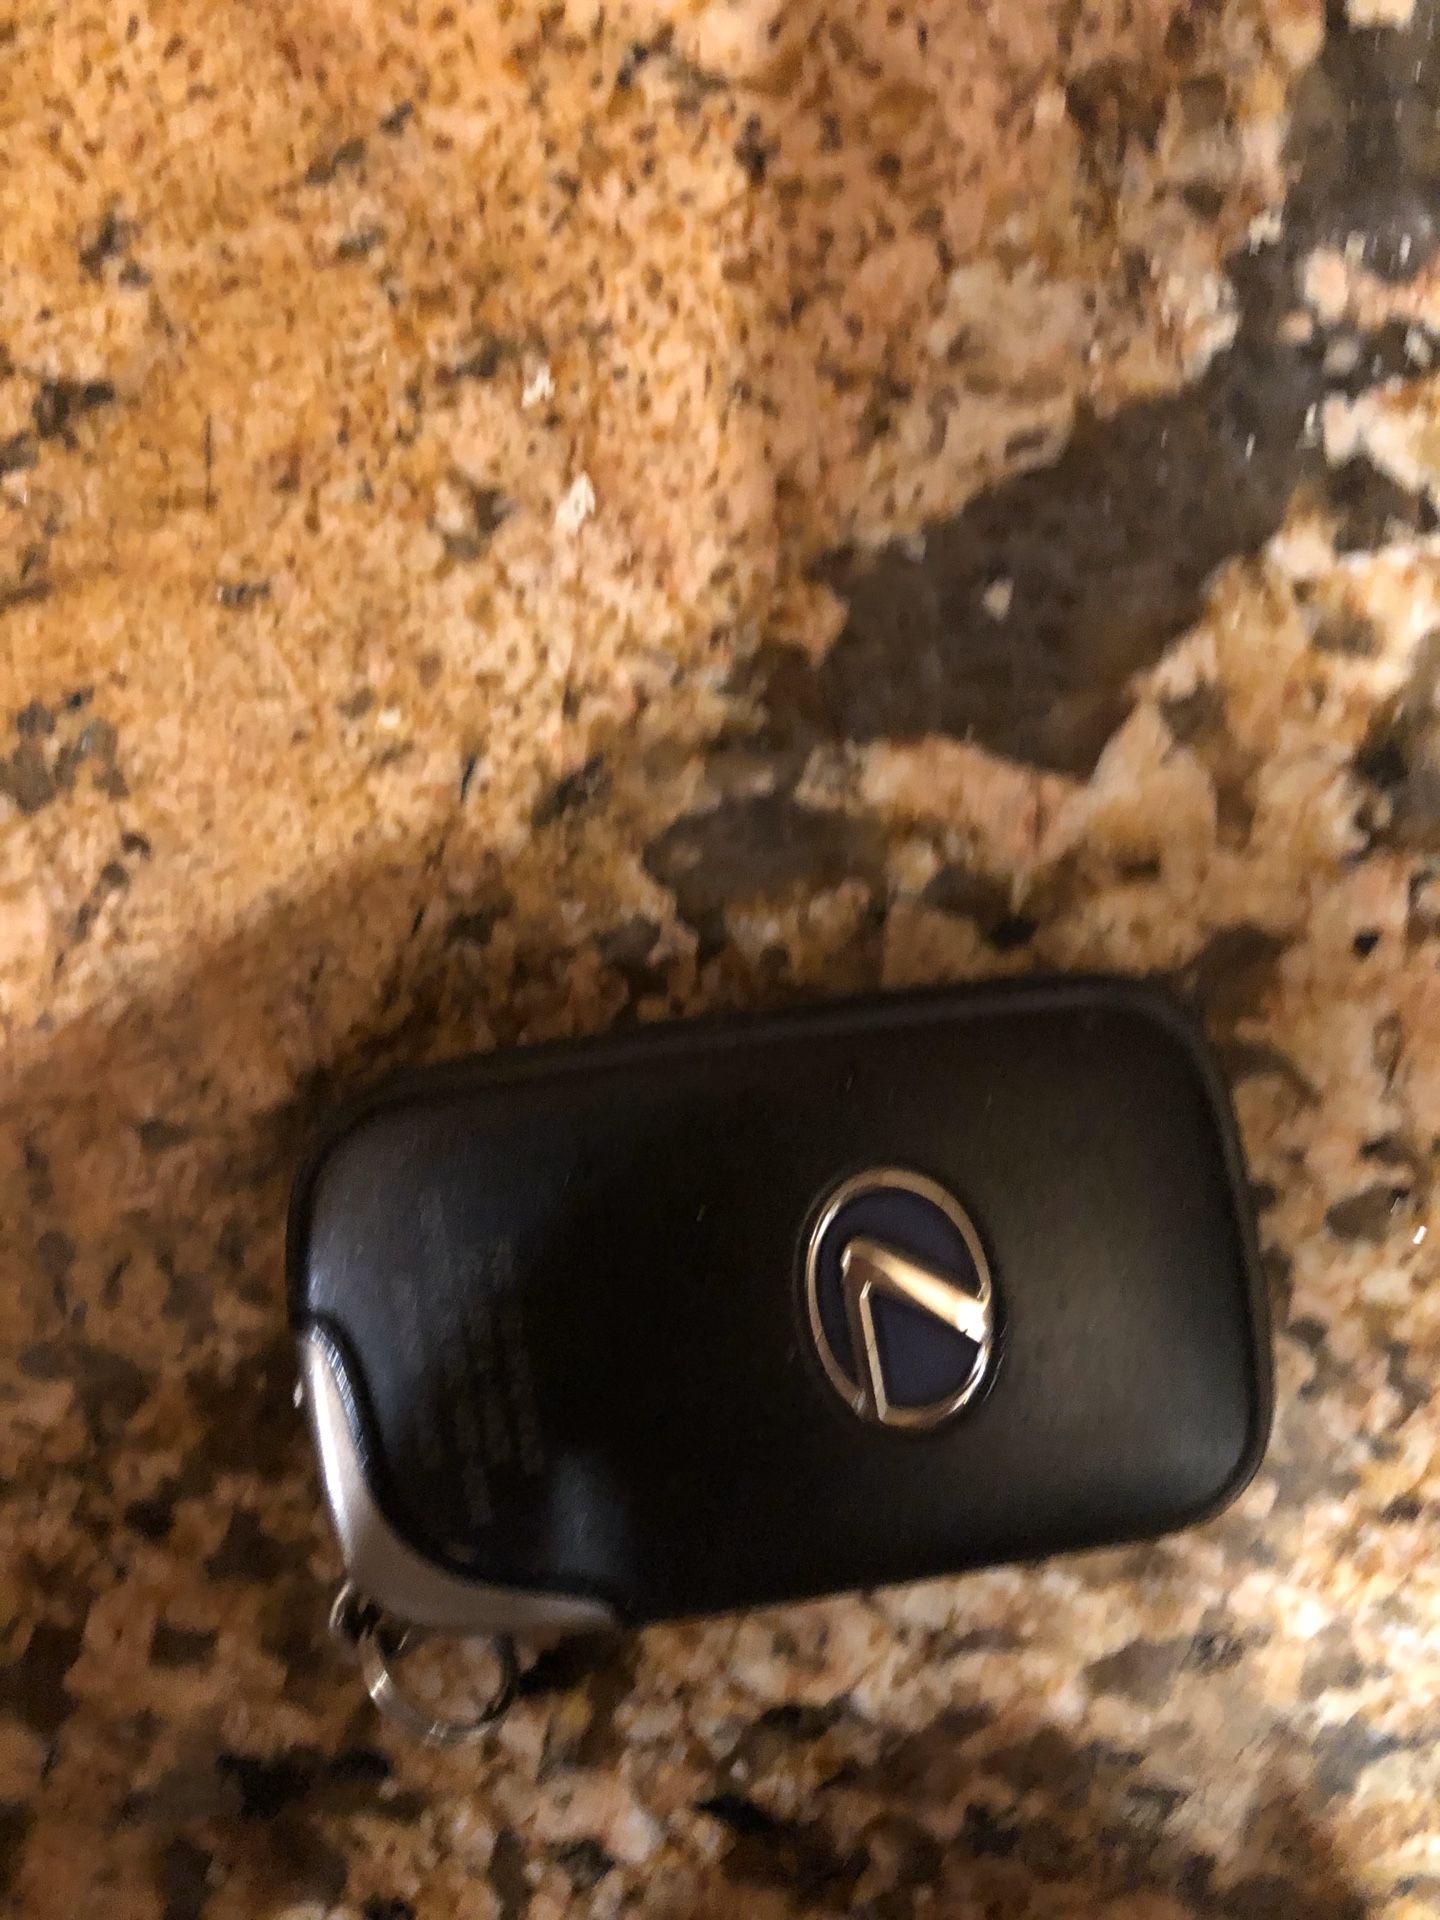 Lexus key